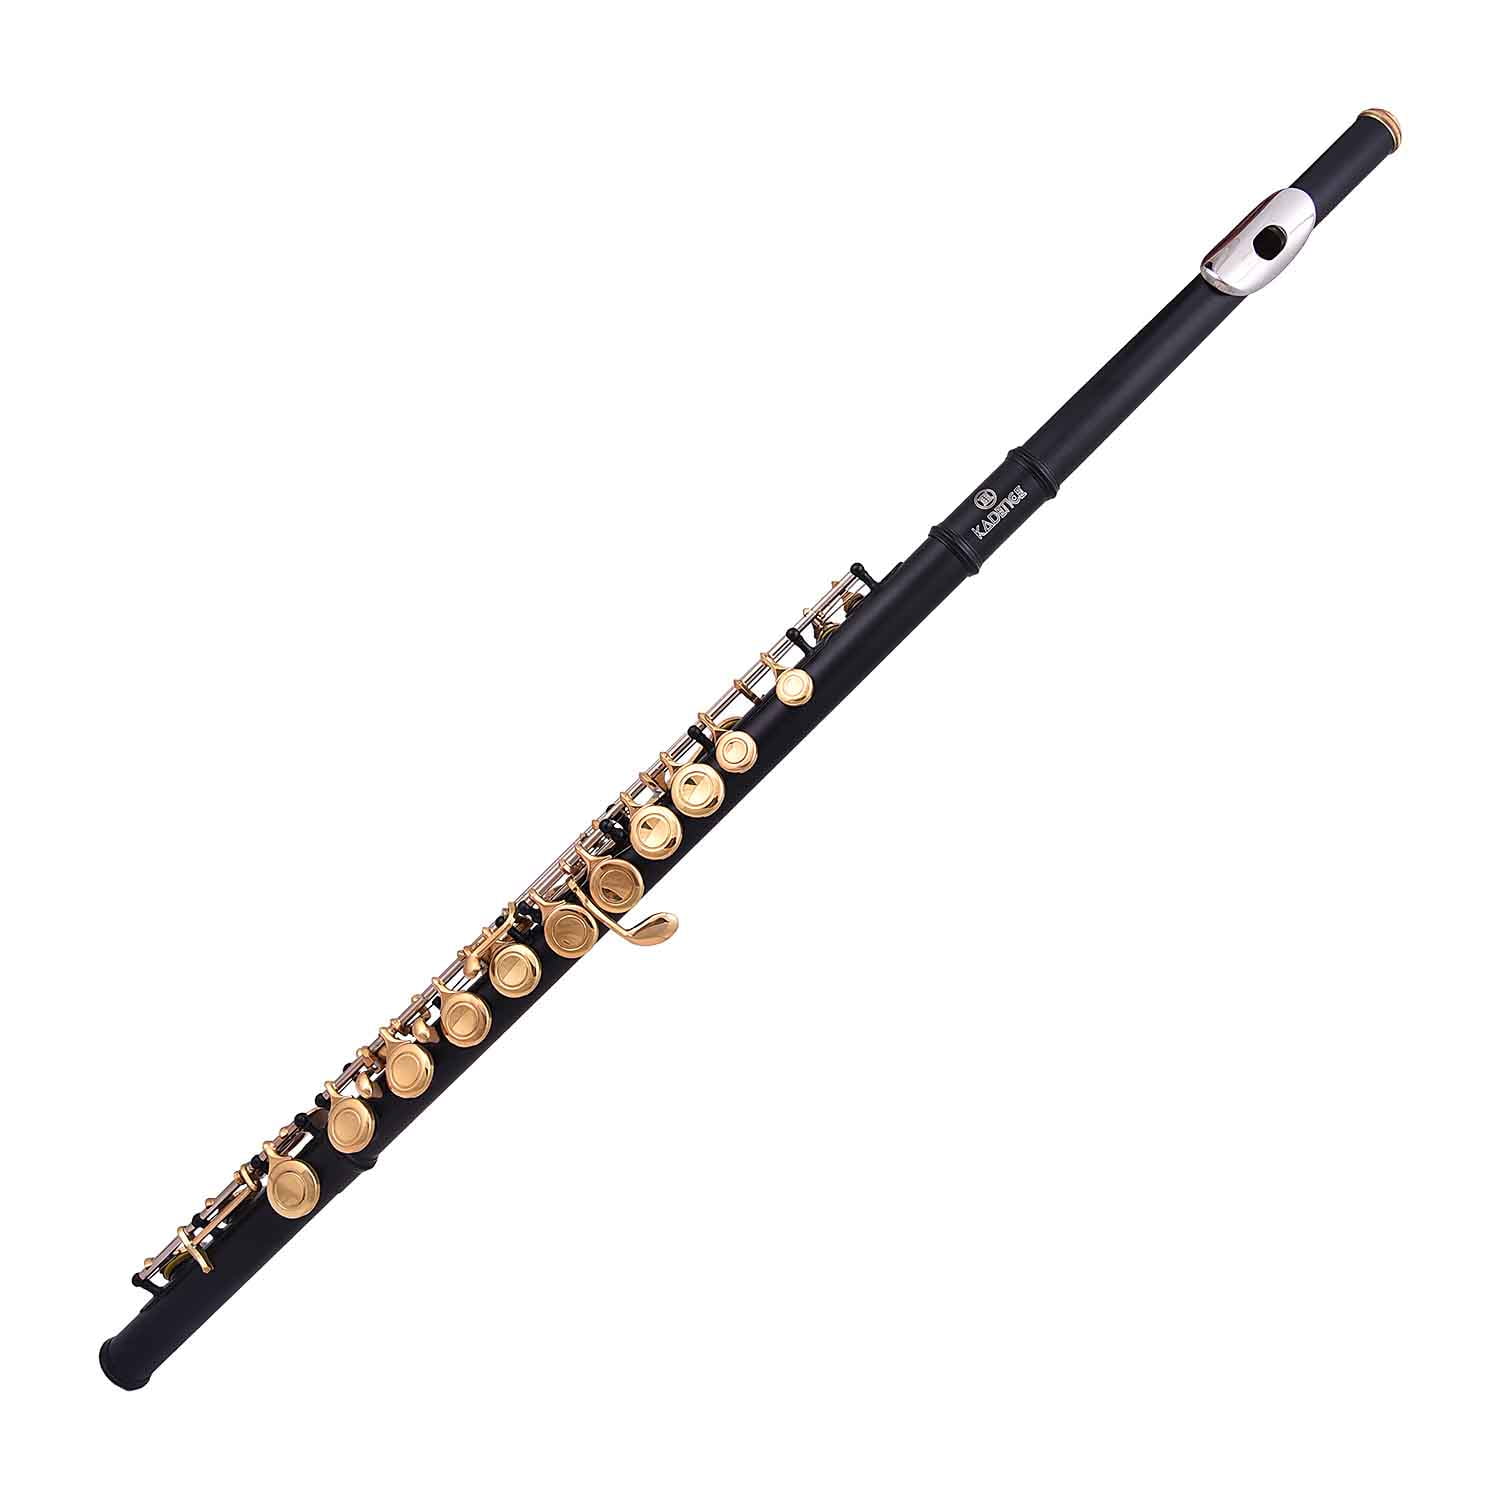 Kadence Metal Flute K-Flute Black 1. Kadence Metal Flute K-Flute Black. 